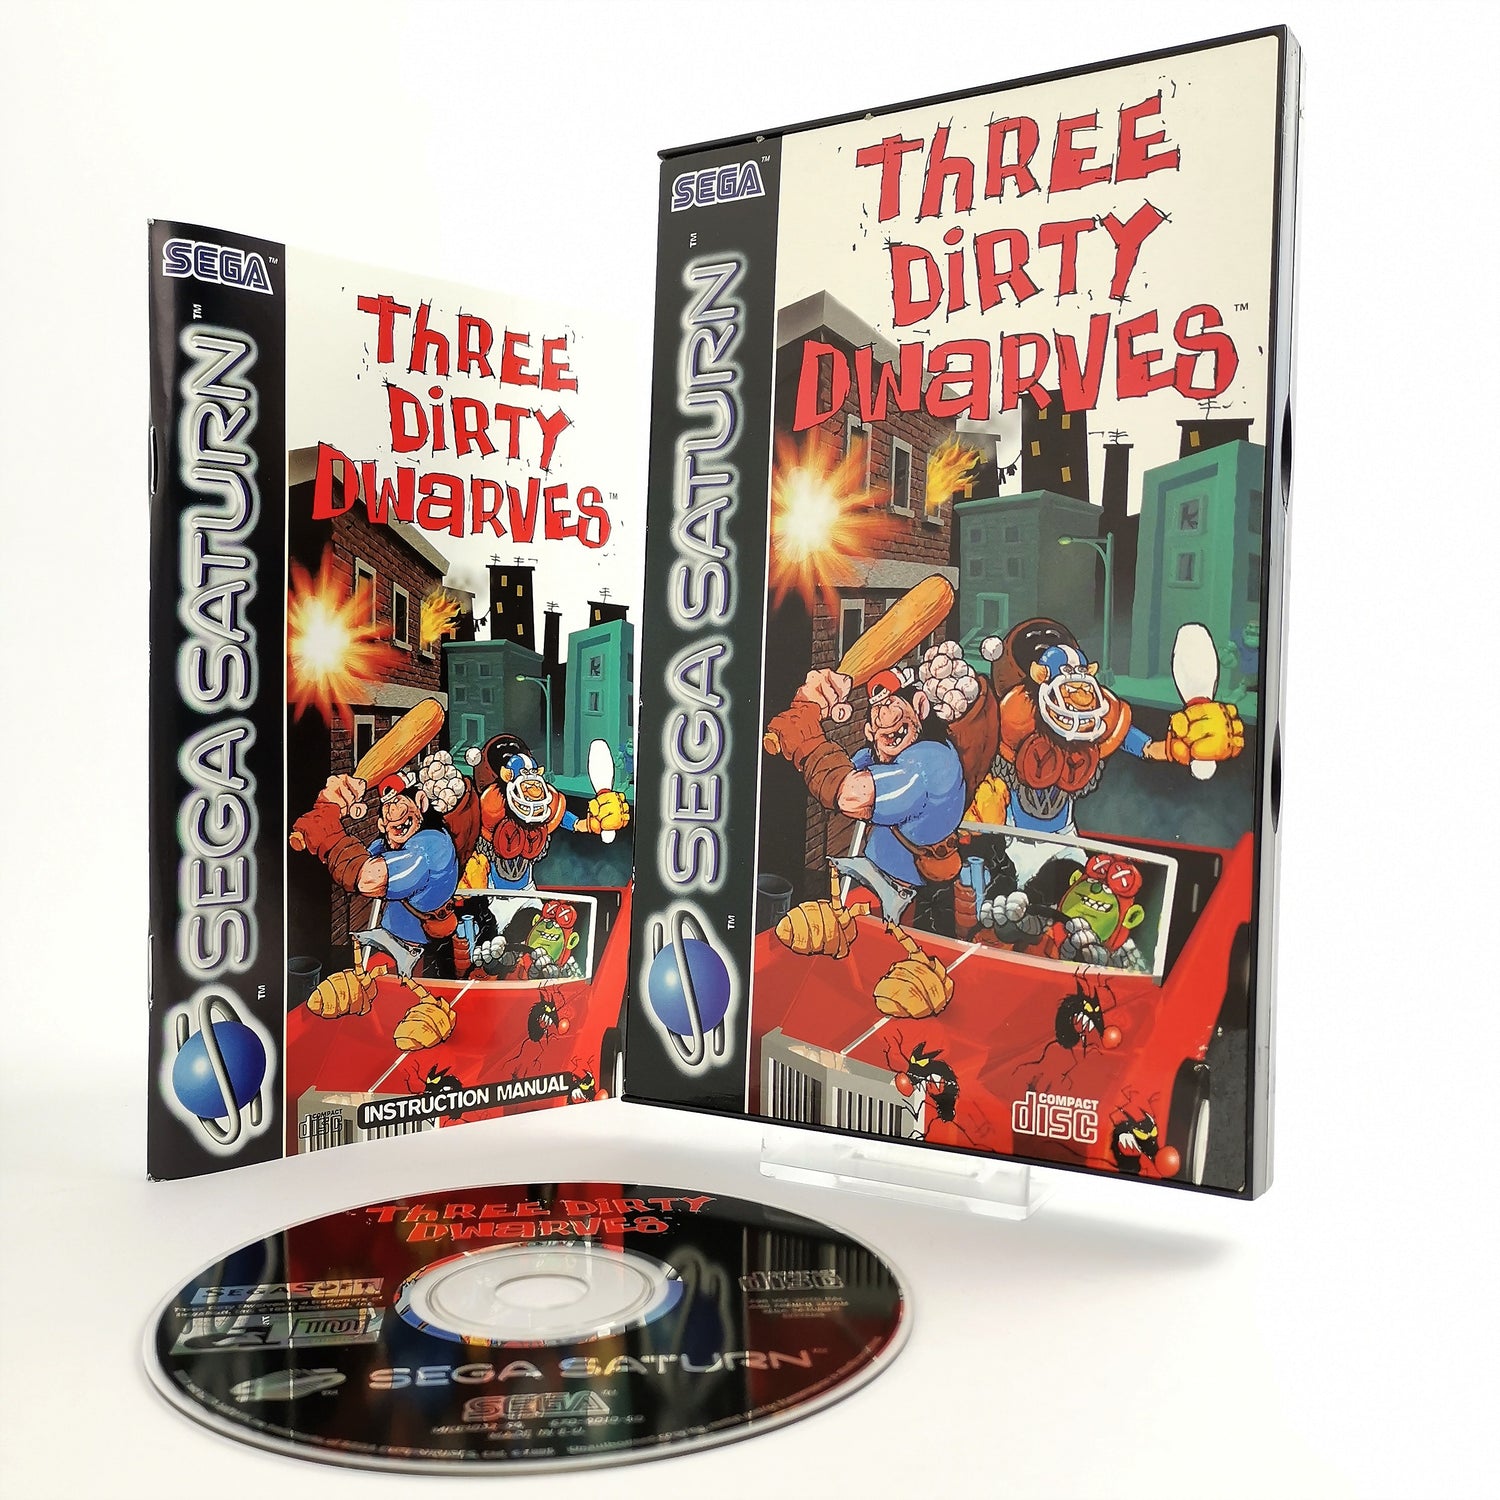 Sega Saturn Game: Three Dirty Dwarves - Original Packaging & Instructions | PAL version